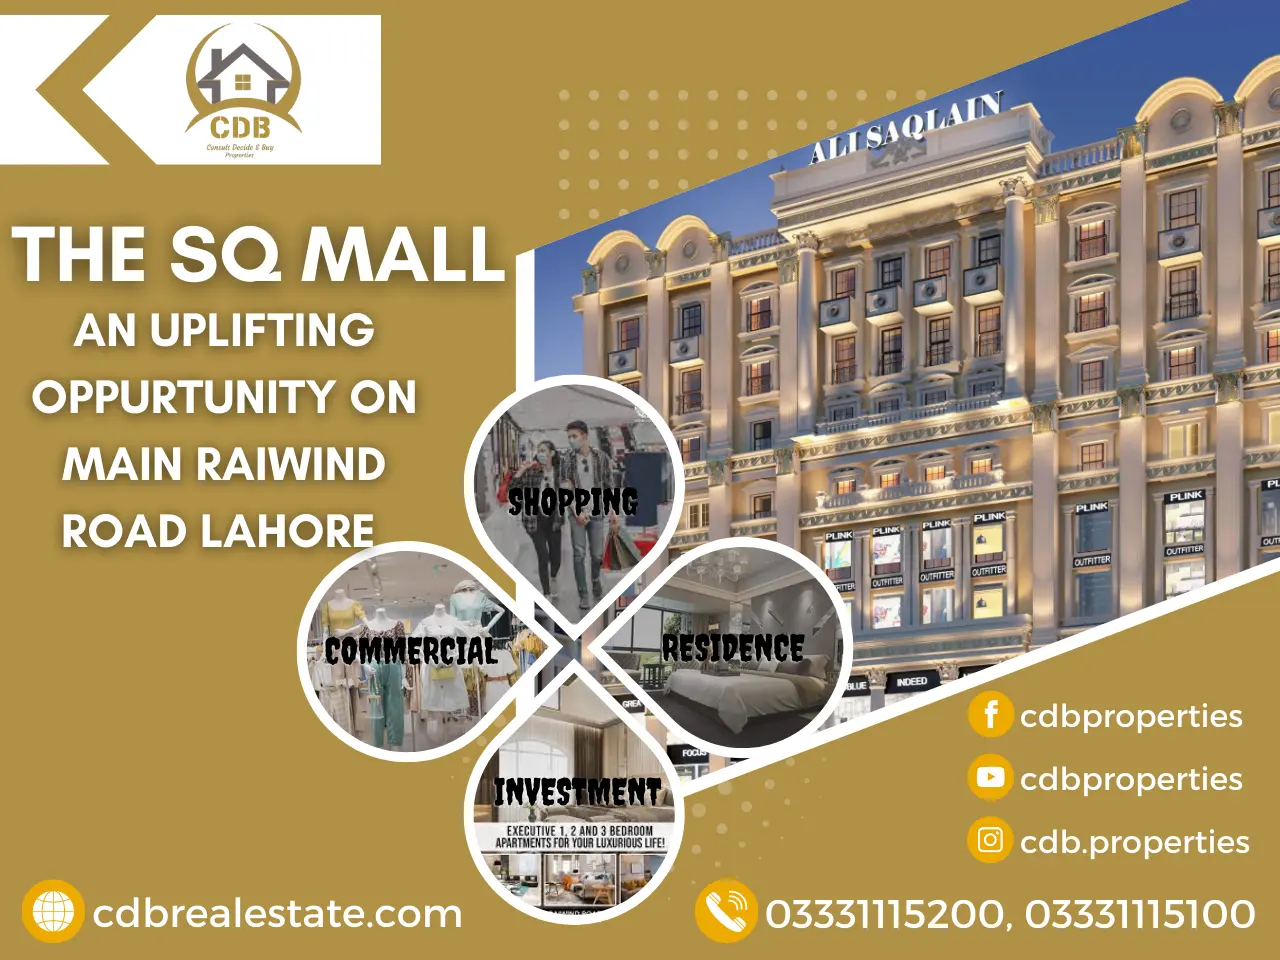 SQ Mall On Main Raiwind Road Lahore